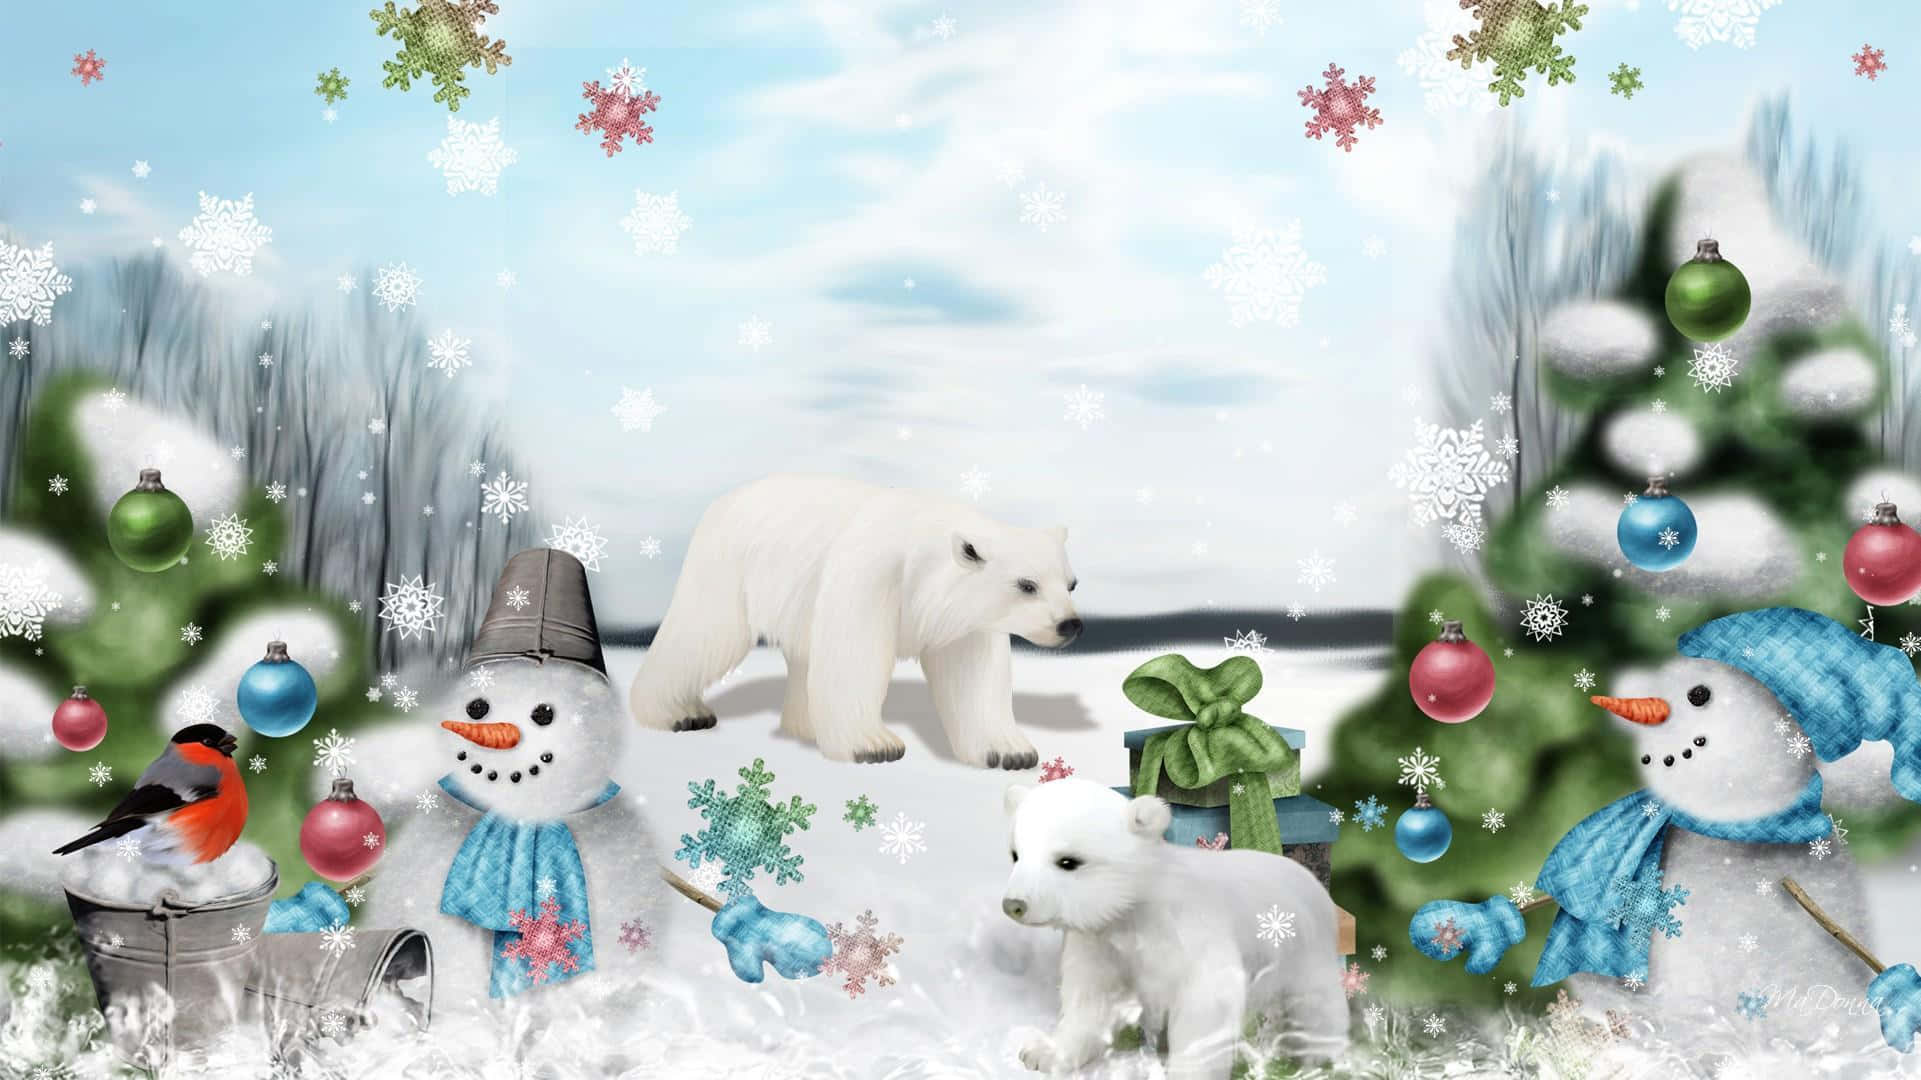 “A Polar Bear Taking a Nap in a Crystal Clear Arctic Scene”